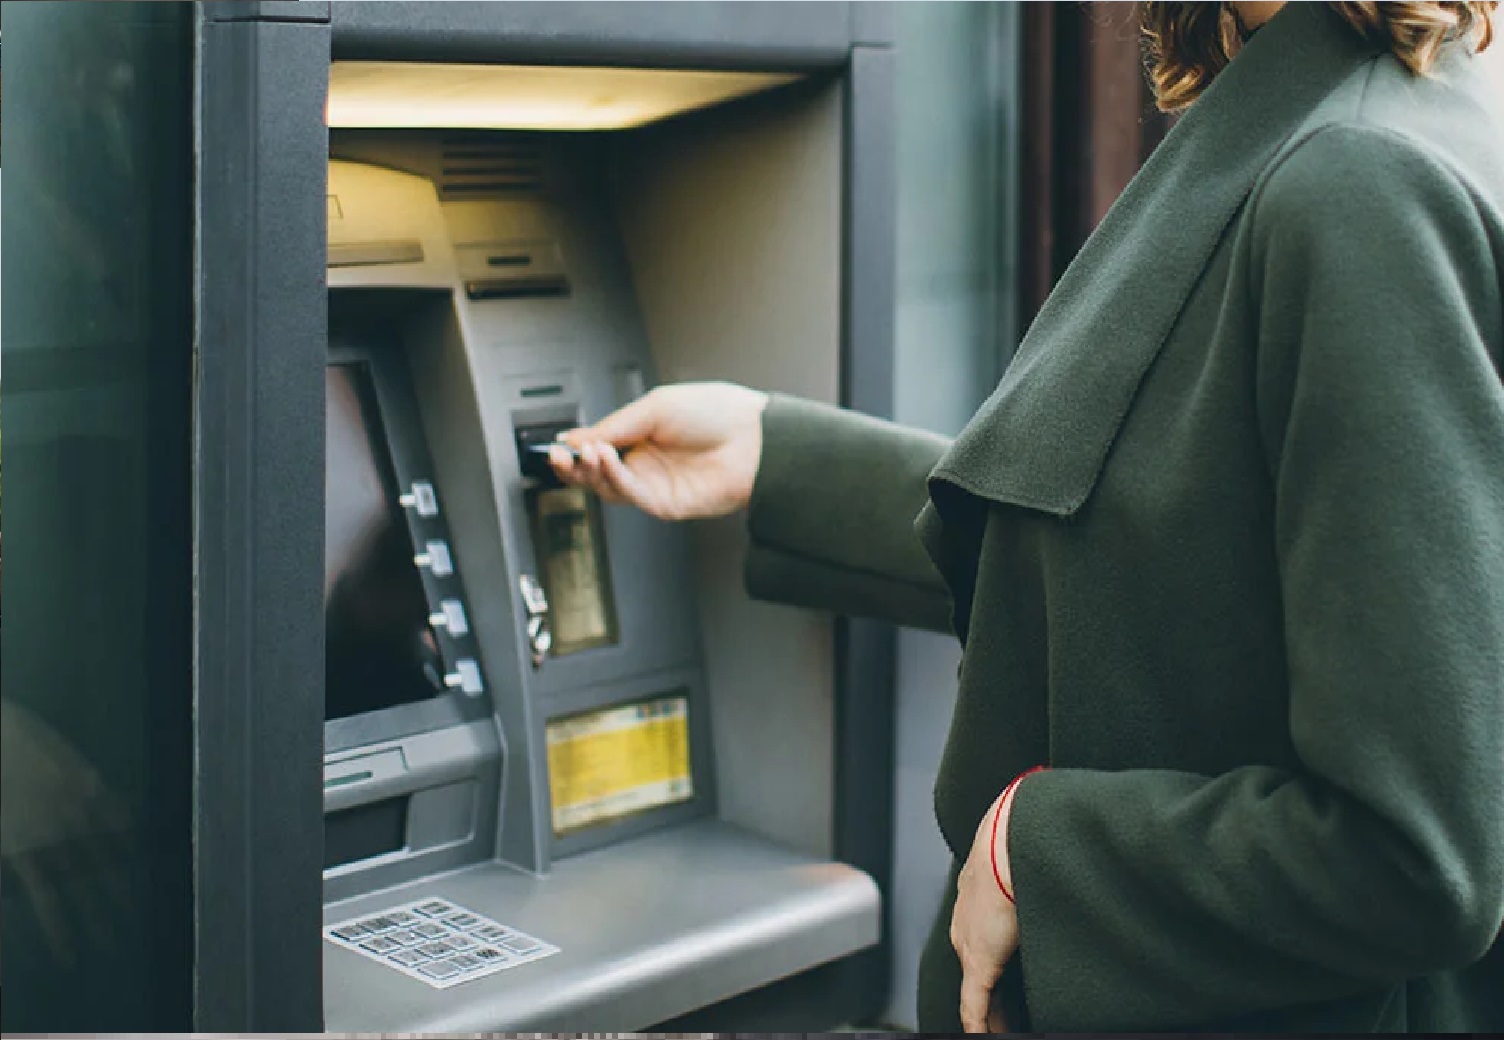 Люди снимают деньги со счетов. Банкомат деньги. Женщина у банкомата. Девушка возле банкомата. Деньги женщина Банкомат мошенники.